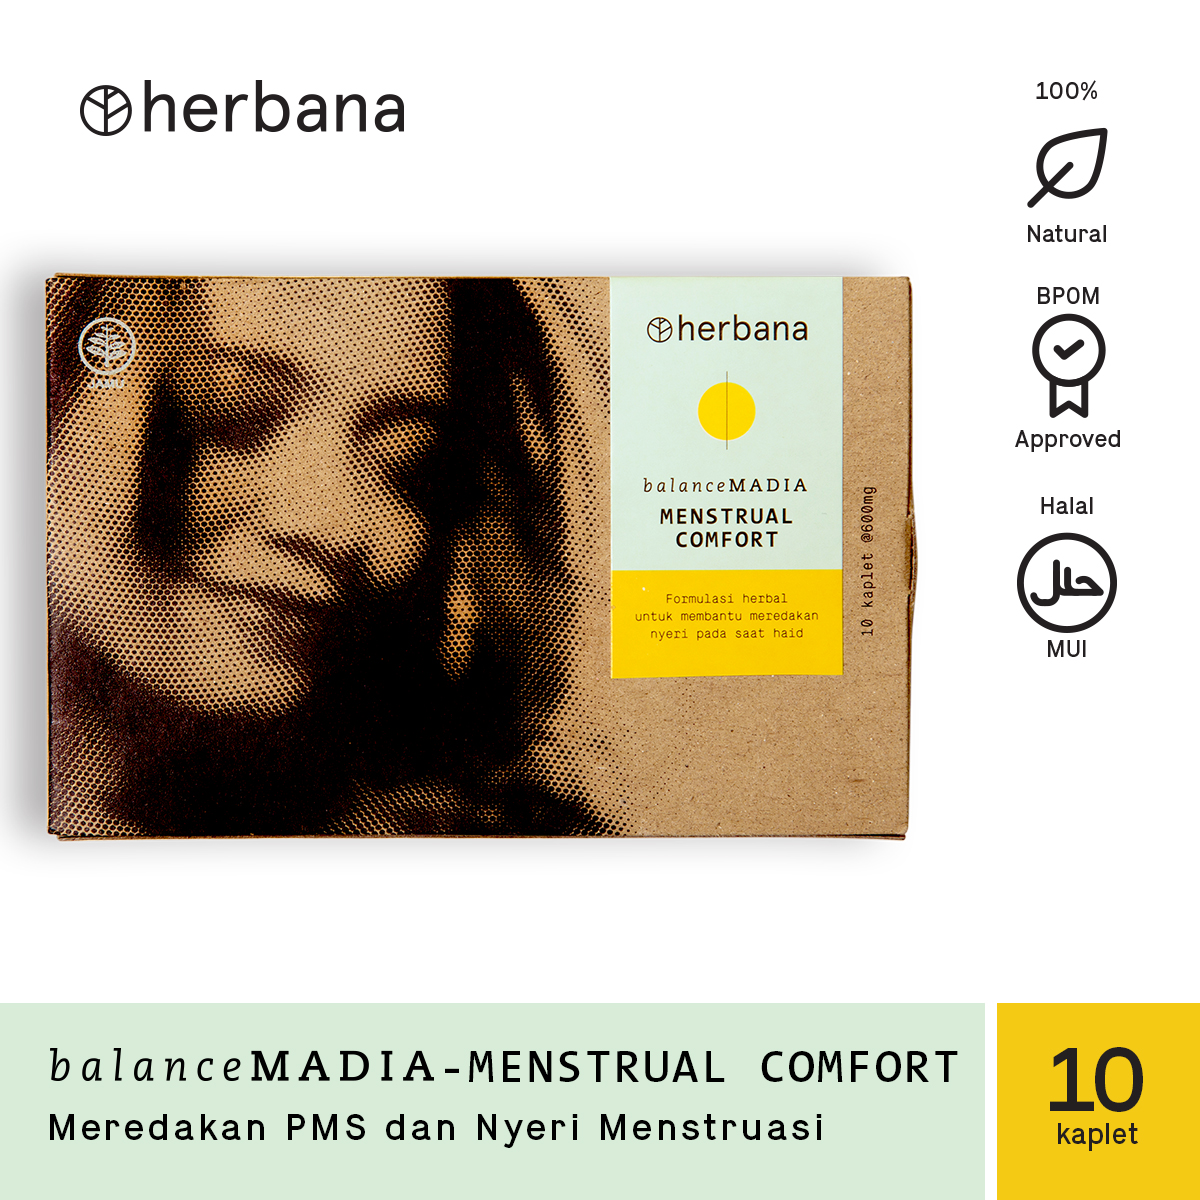 herbana-balance-madia-menstrual-comfort-10-caplets-77-1615972961.jpg